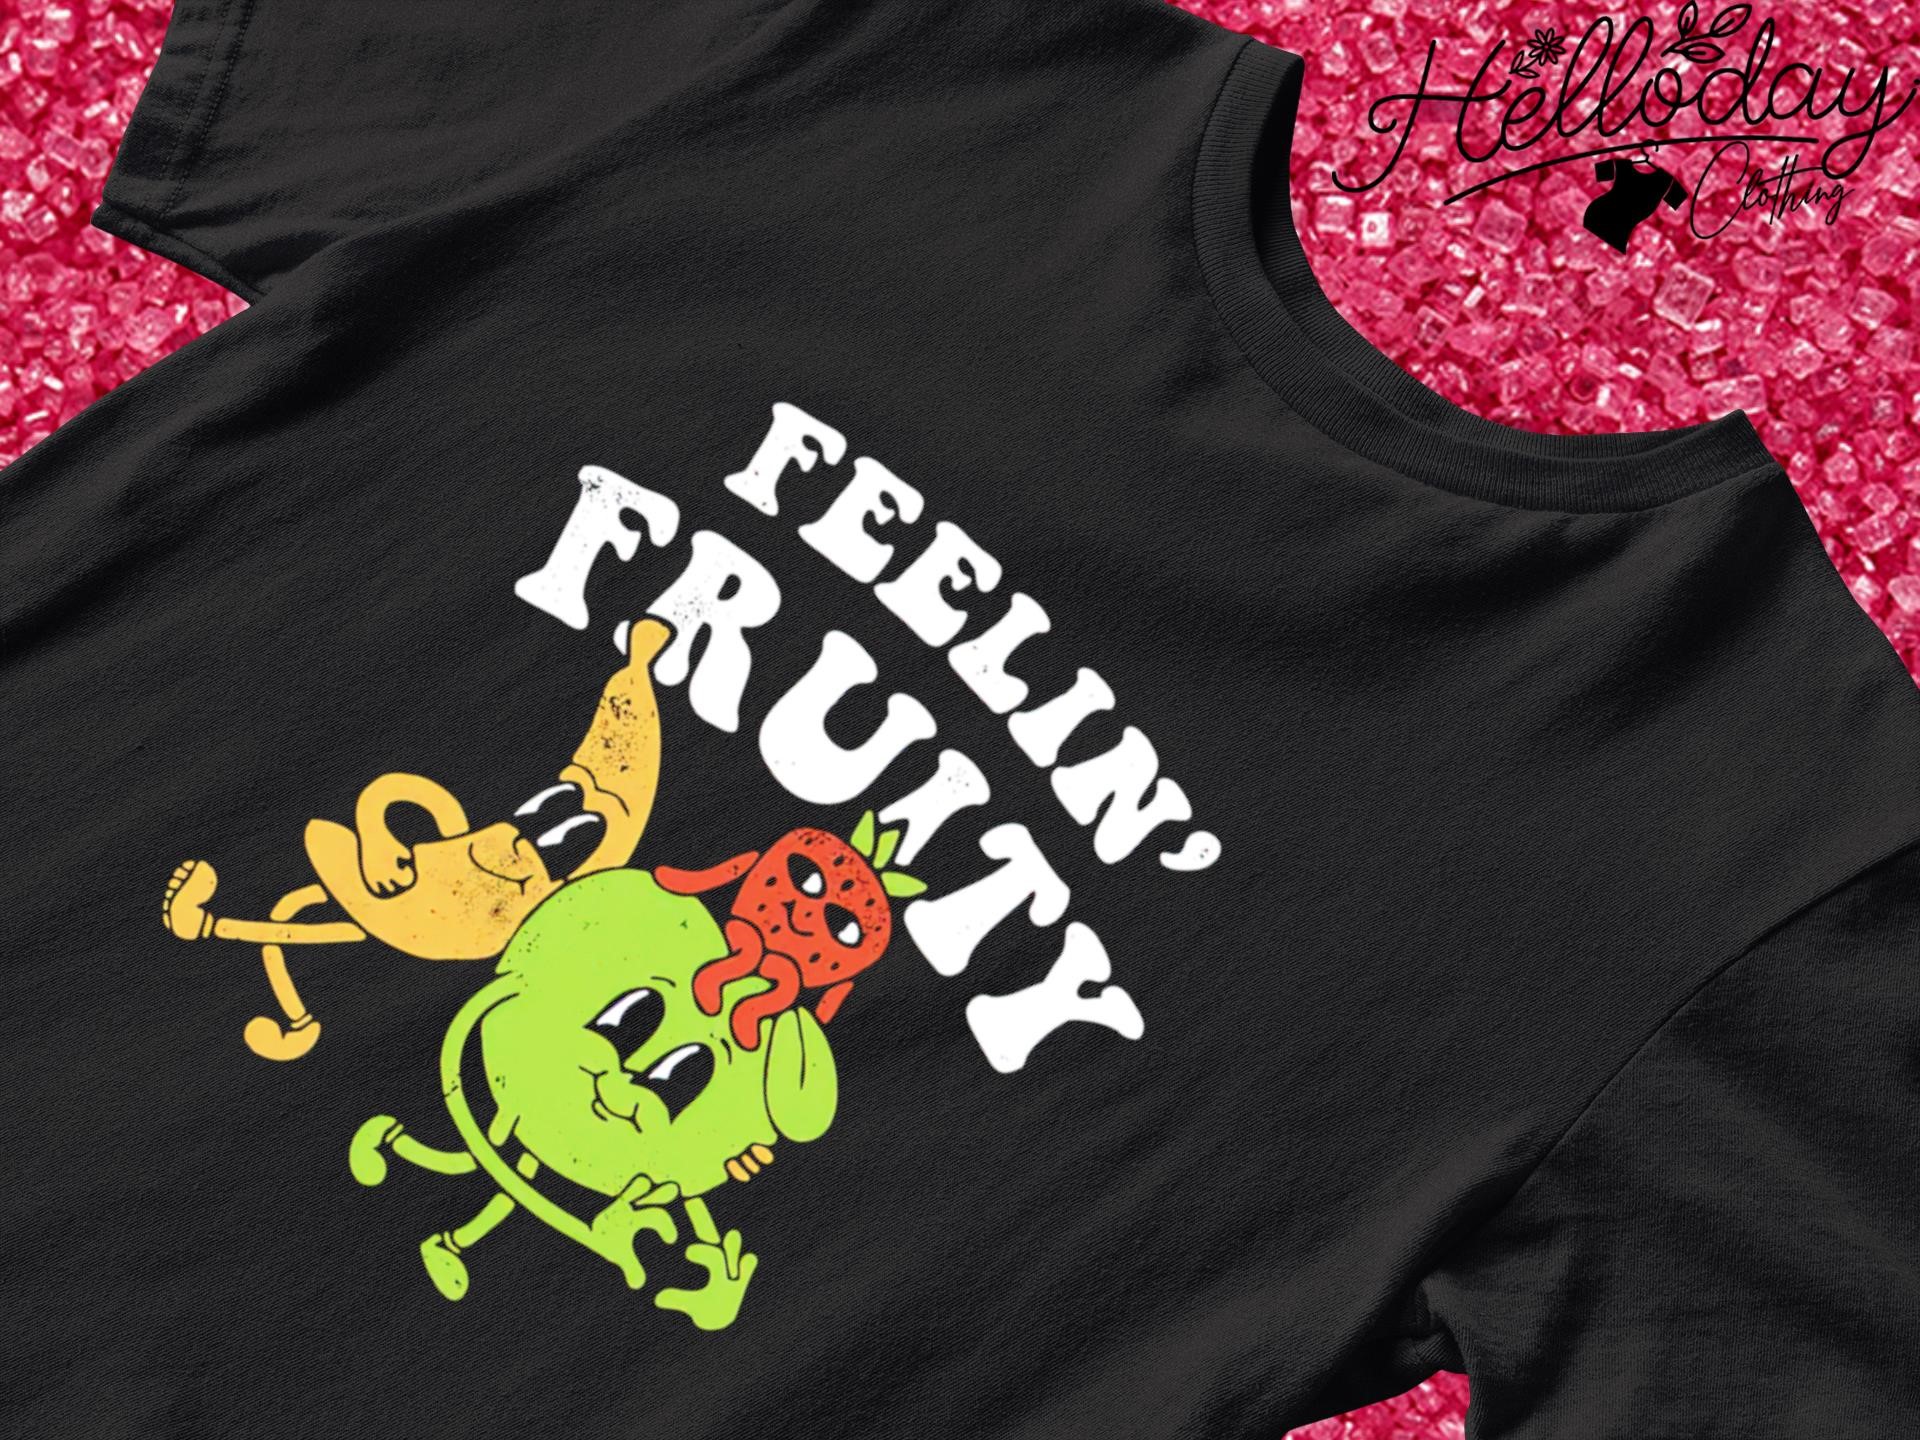 Feelin' Fruity shirt